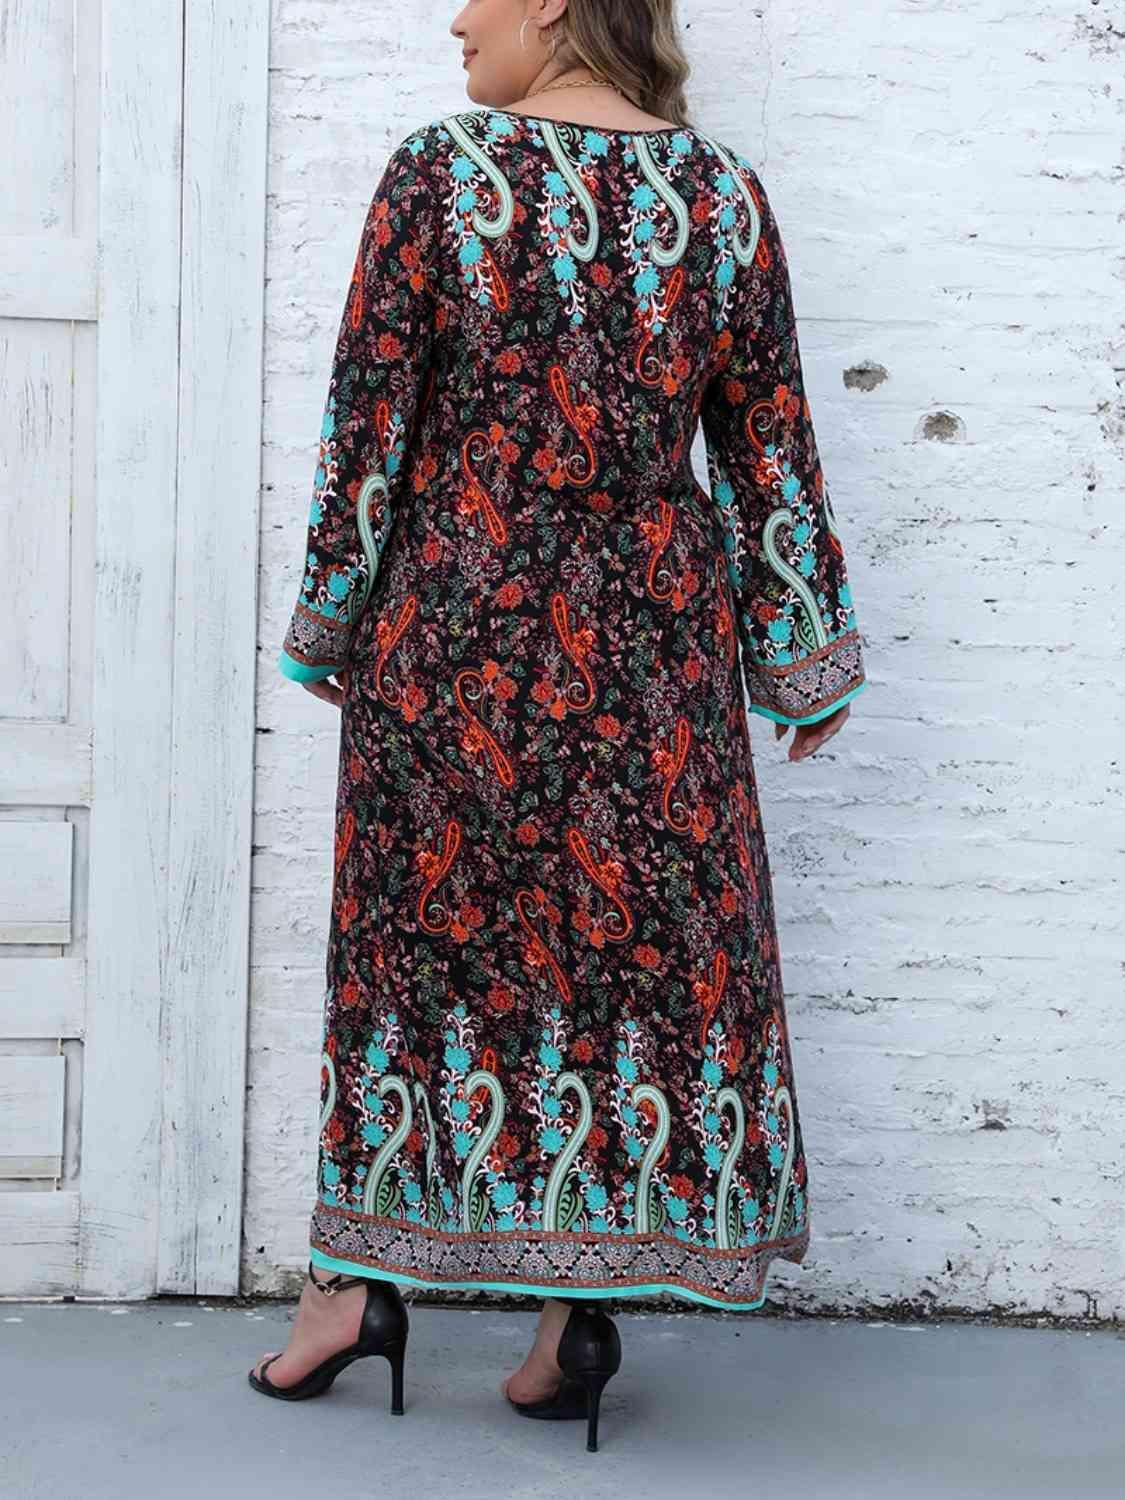 Tassel Accent Plus Size Floral Print Dress - MXSTUDIO.COM